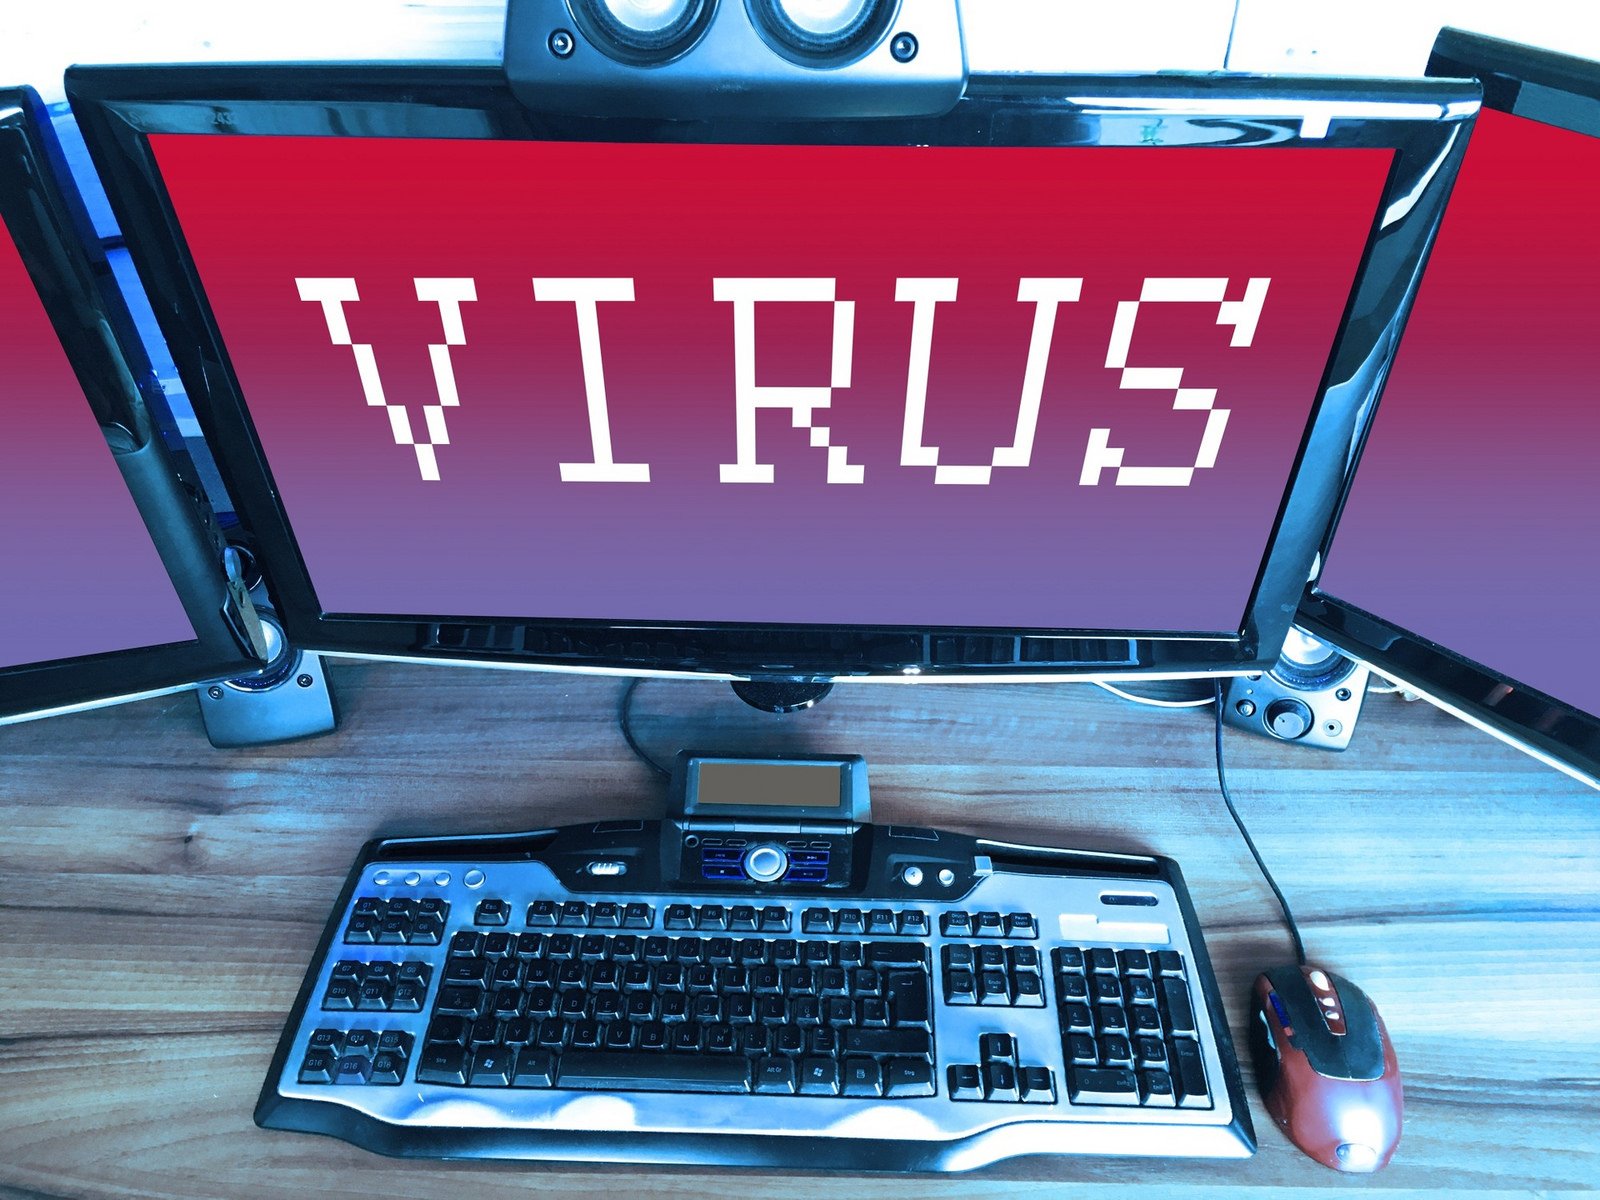 Computer virus is. Компьютерные вирусы. Вирус на компьютере. Компьютерные ВИРУСЫВИРУСЫ. Комп вирусы фото.